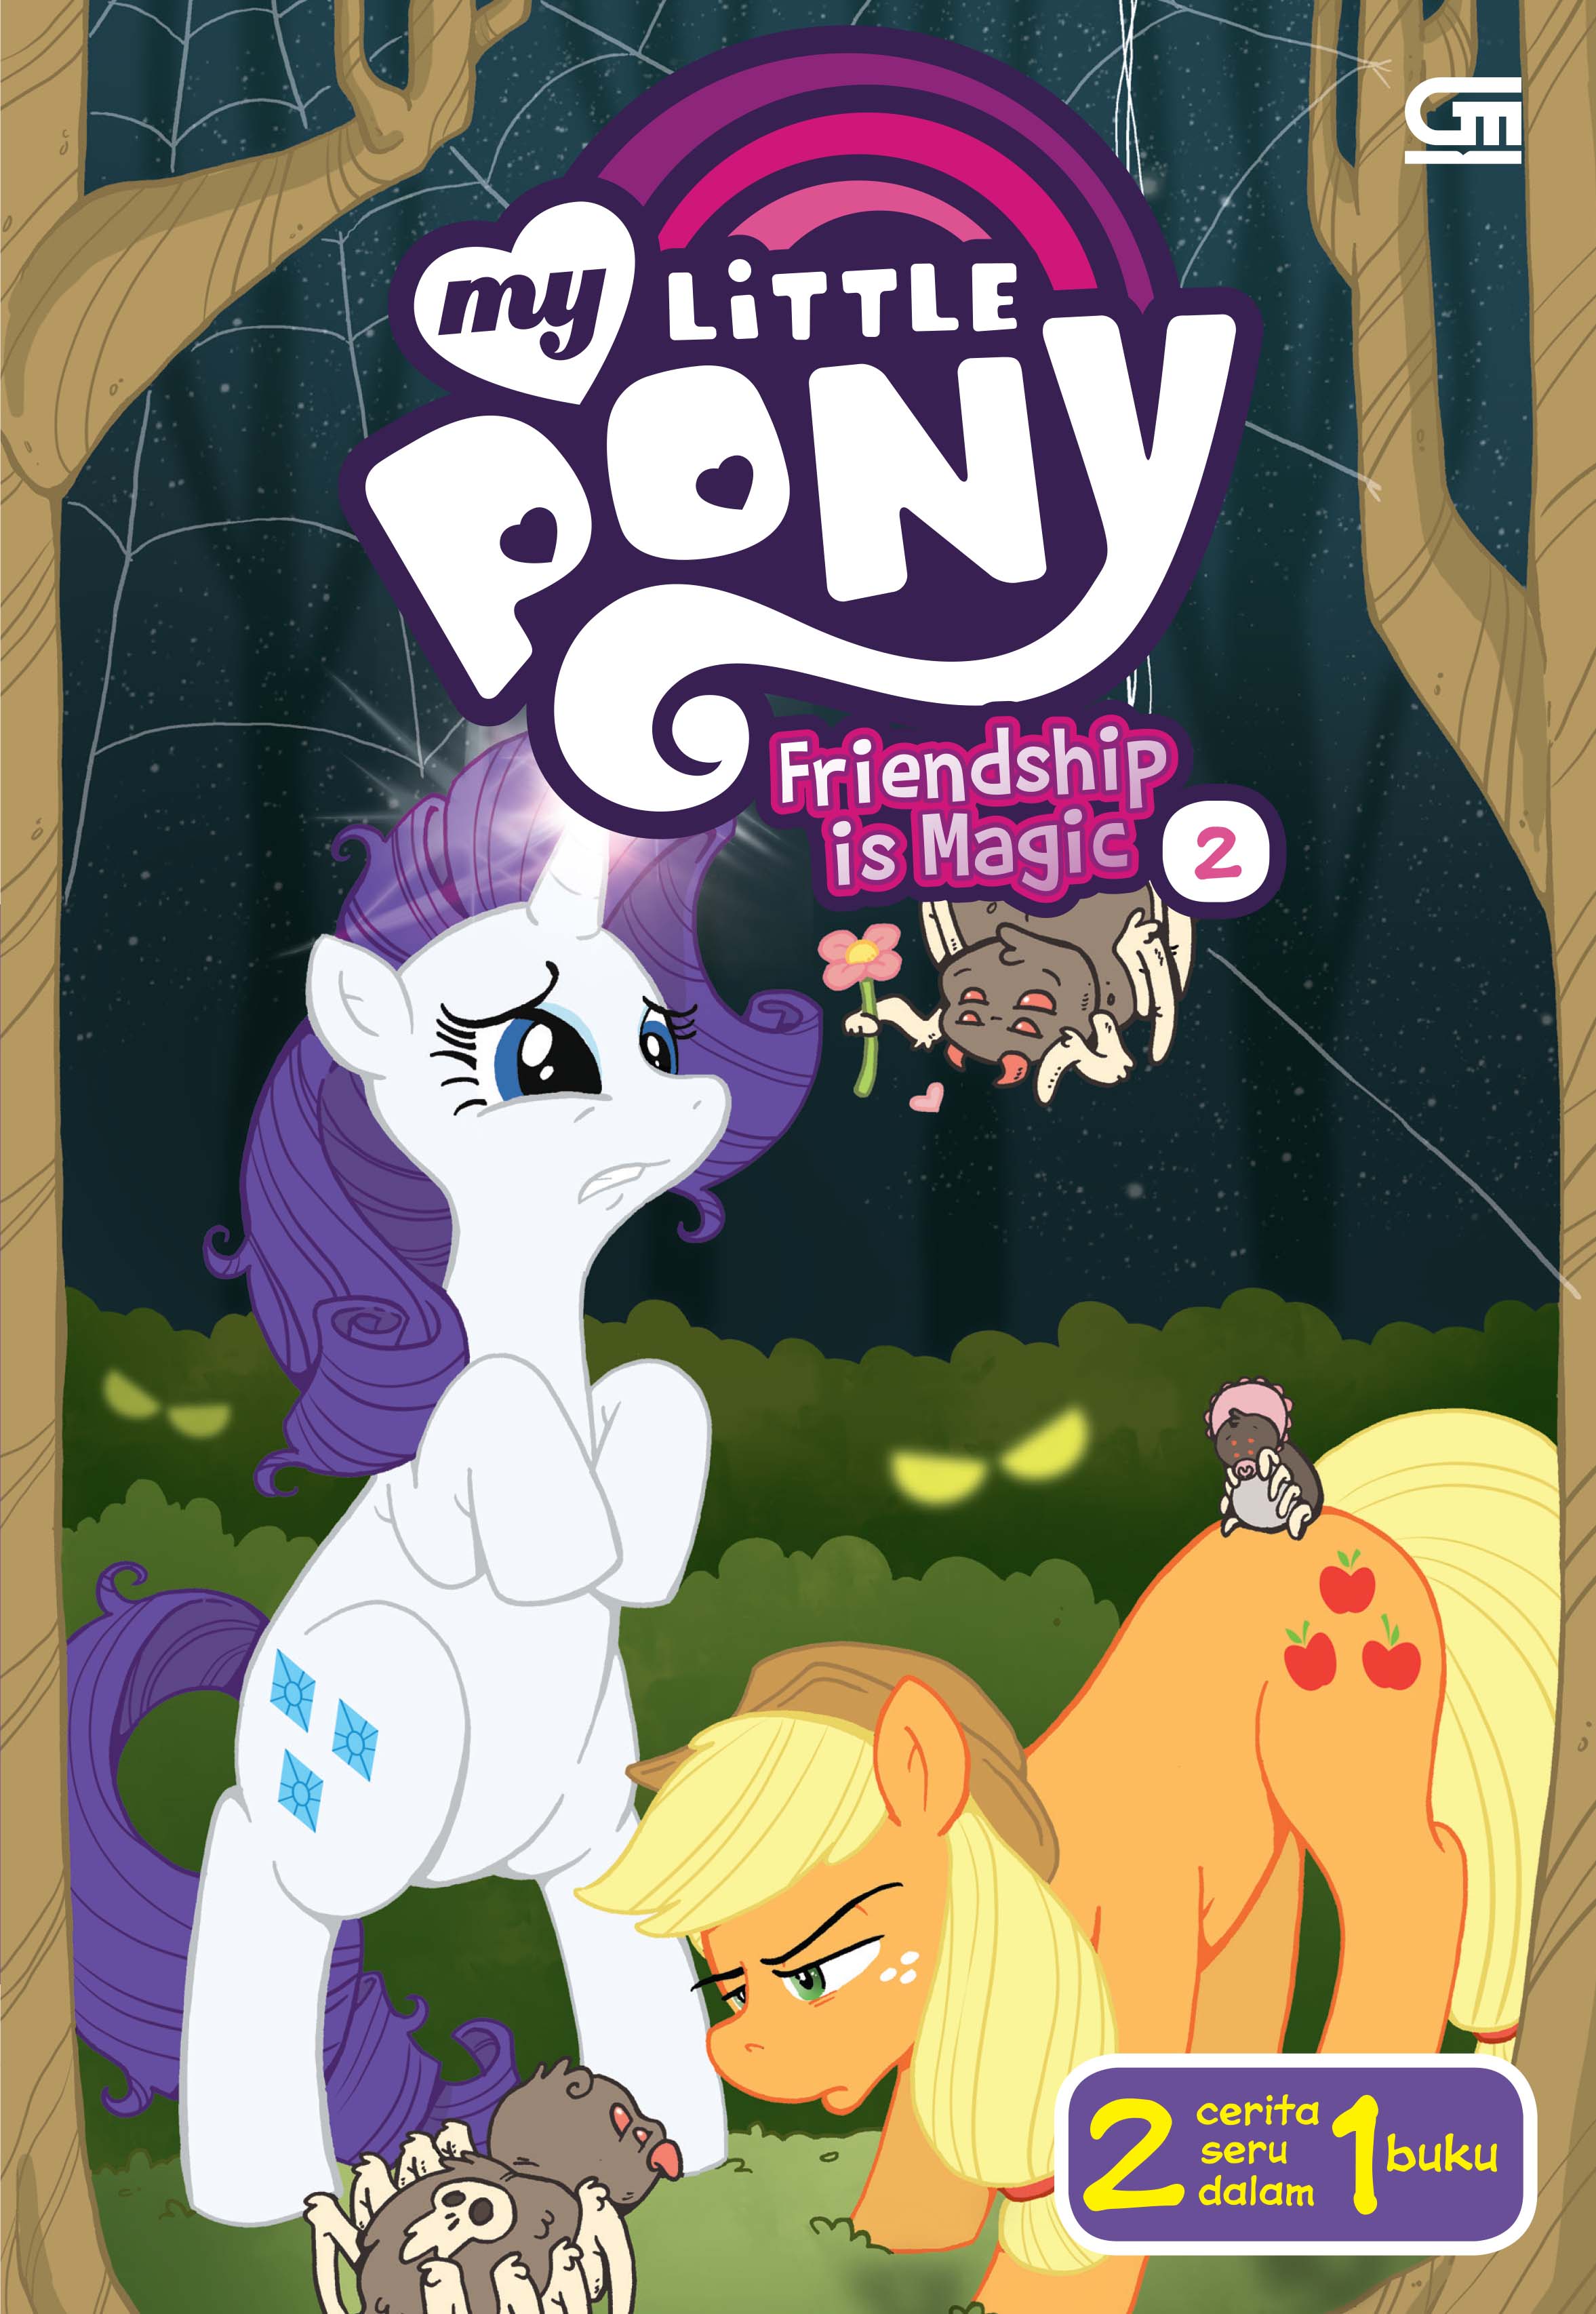 My Little Pony: Friendship is Magic#2